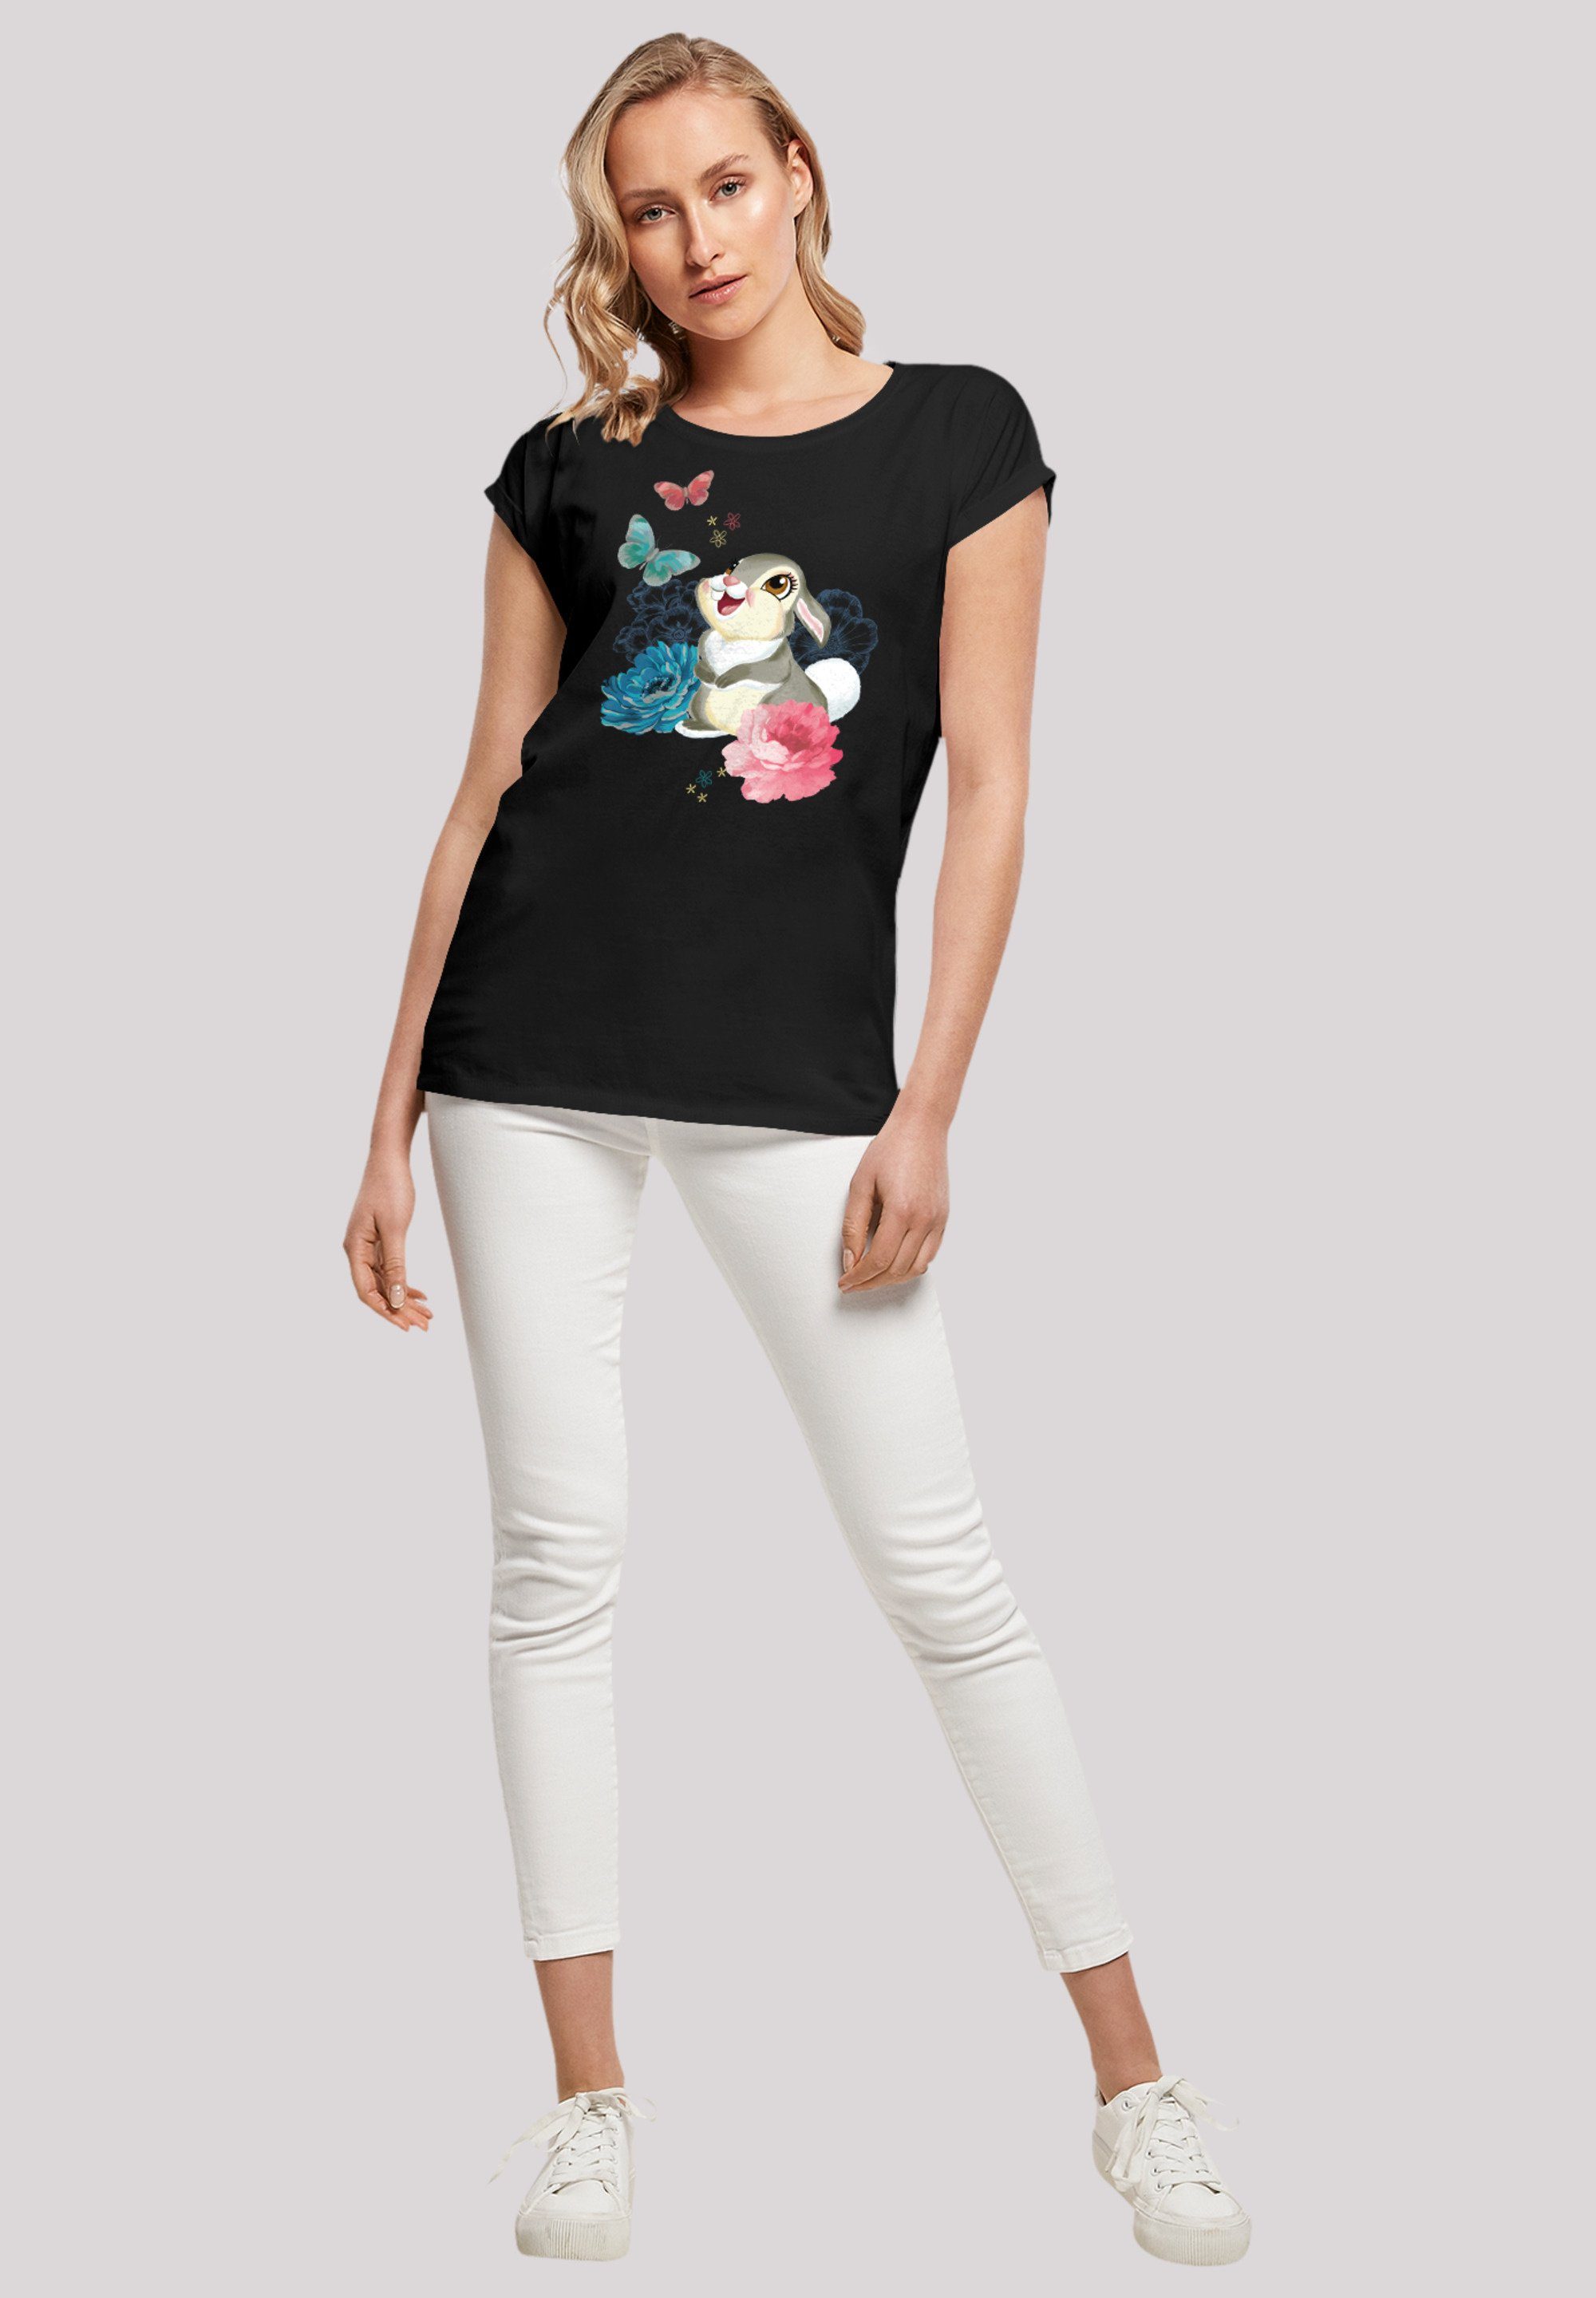 Bambi Premium Qualität Disney F4NT4STIC T-Shirt Klopfer